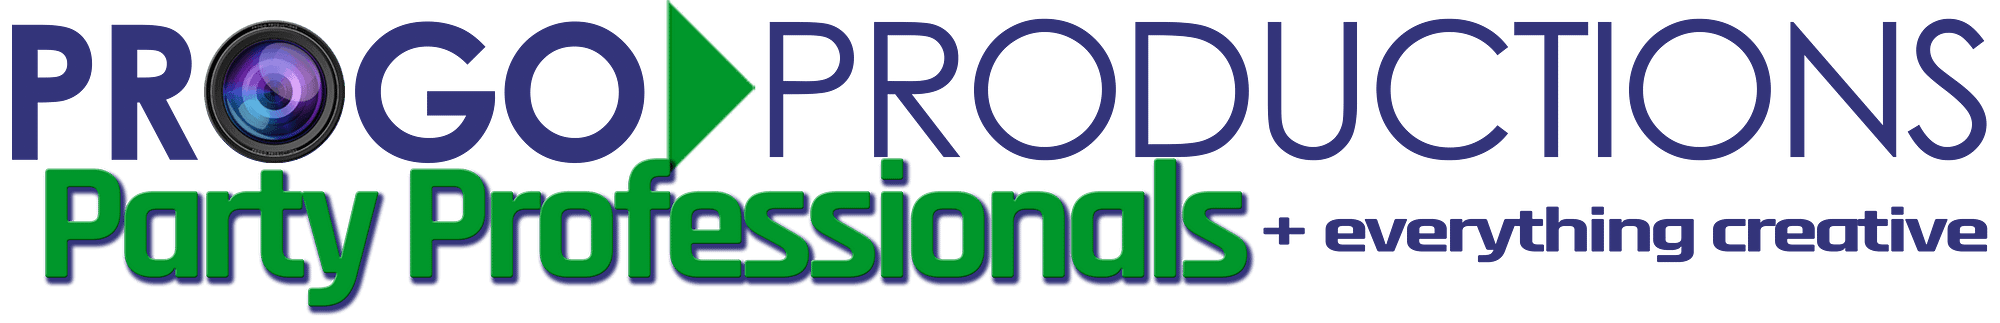 ProGo Productions | (262) 563-2017